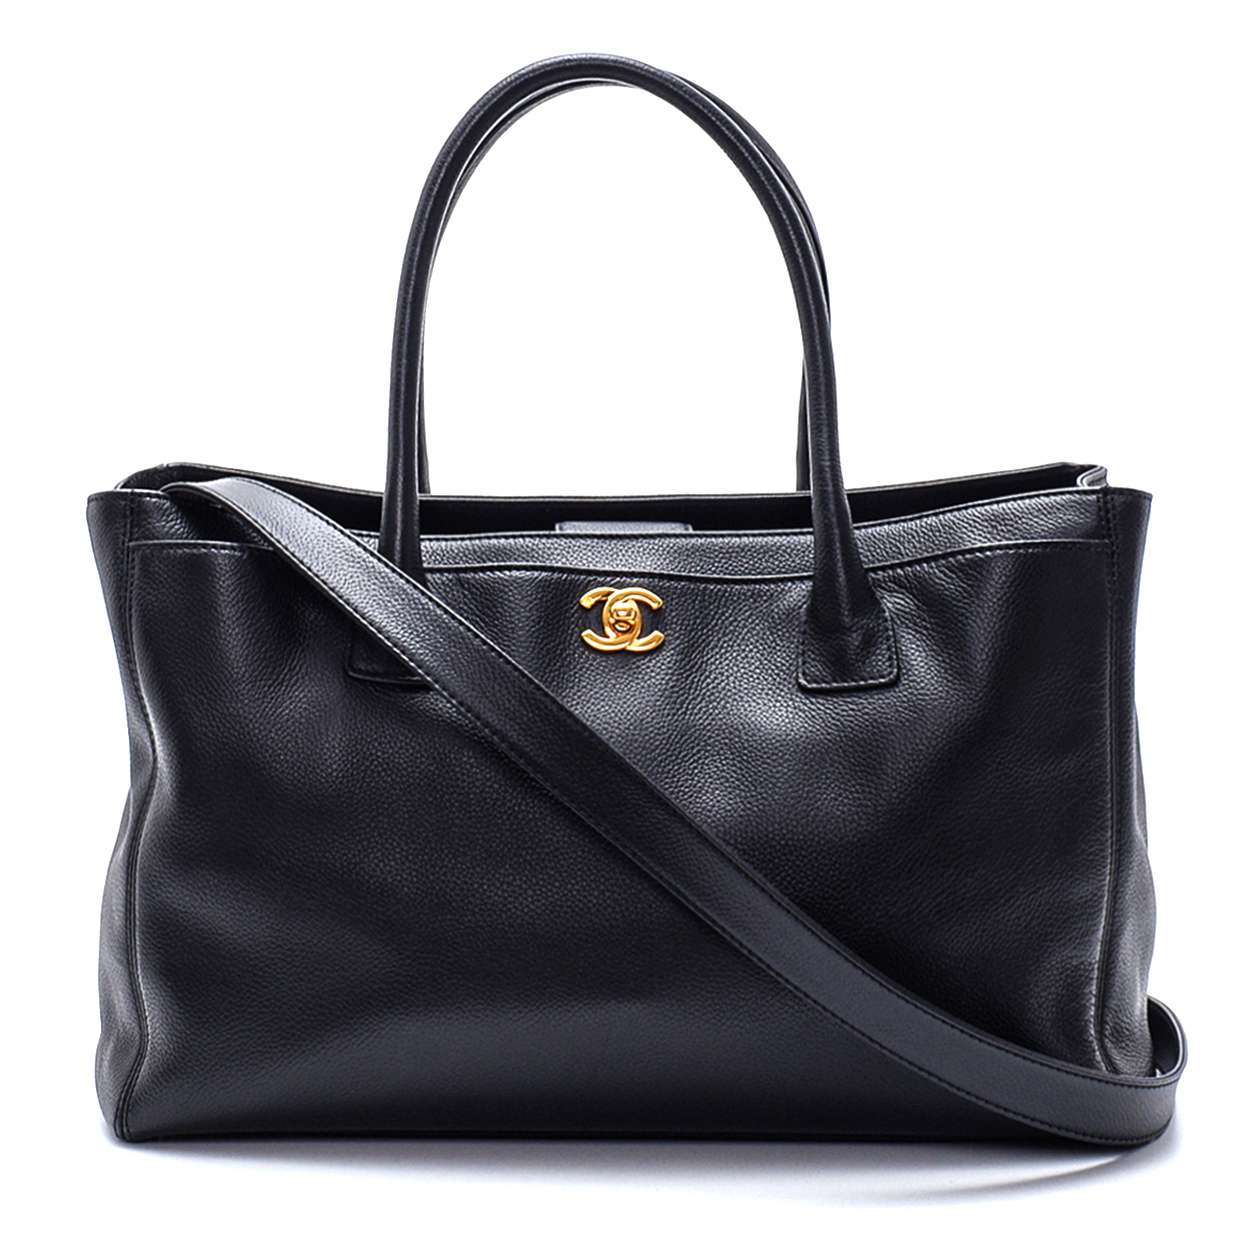 Chanel - Black Executive Caviar Leather Shopping Bag